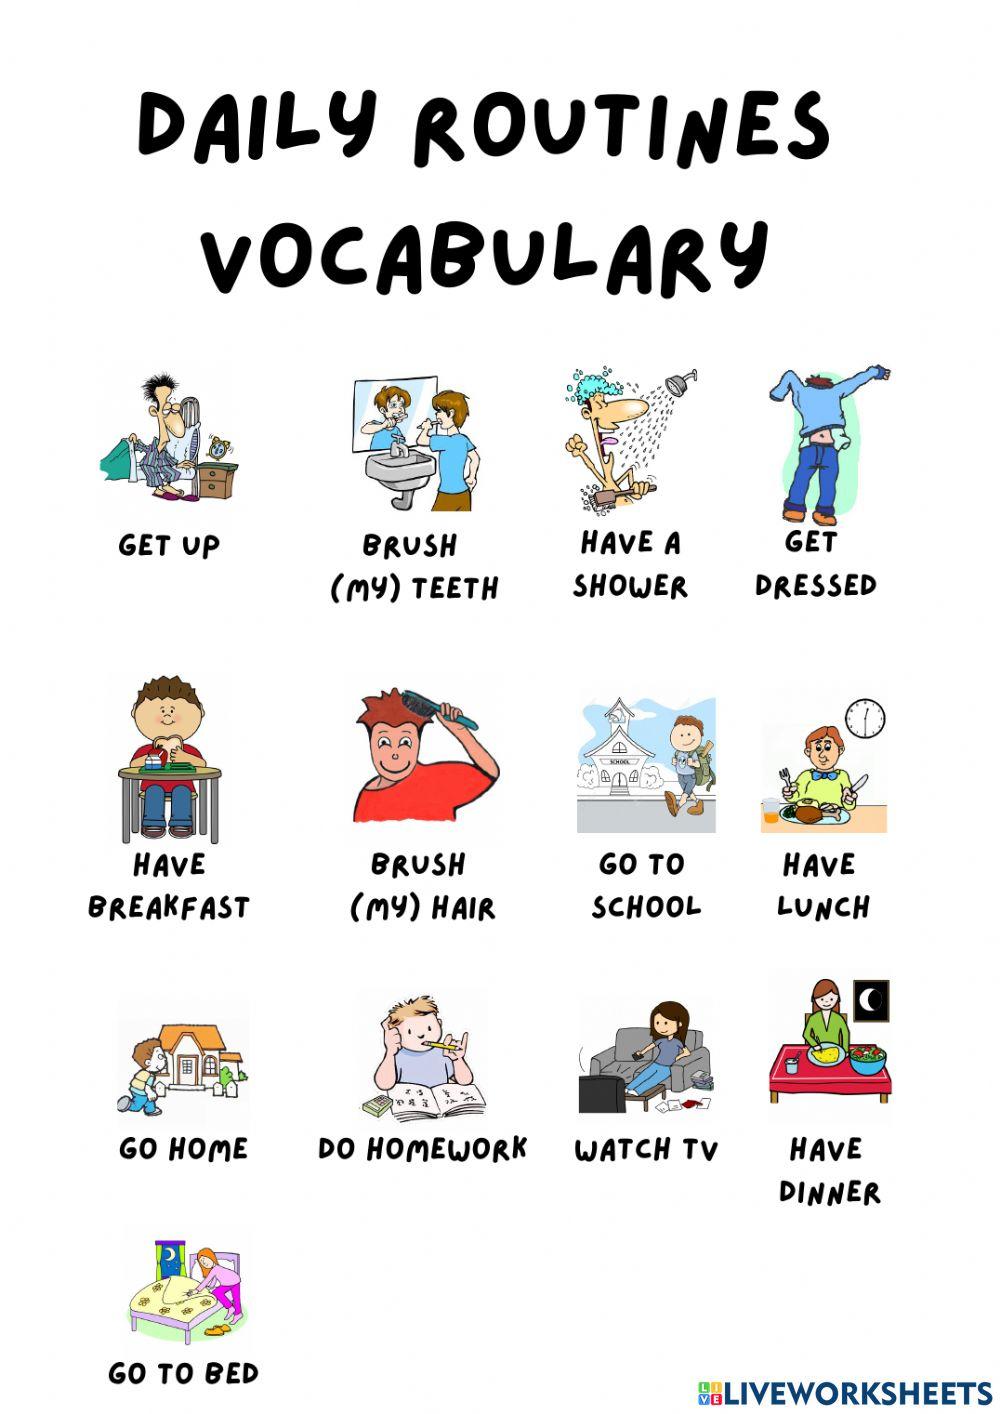 Daily routines vocabulary presentation